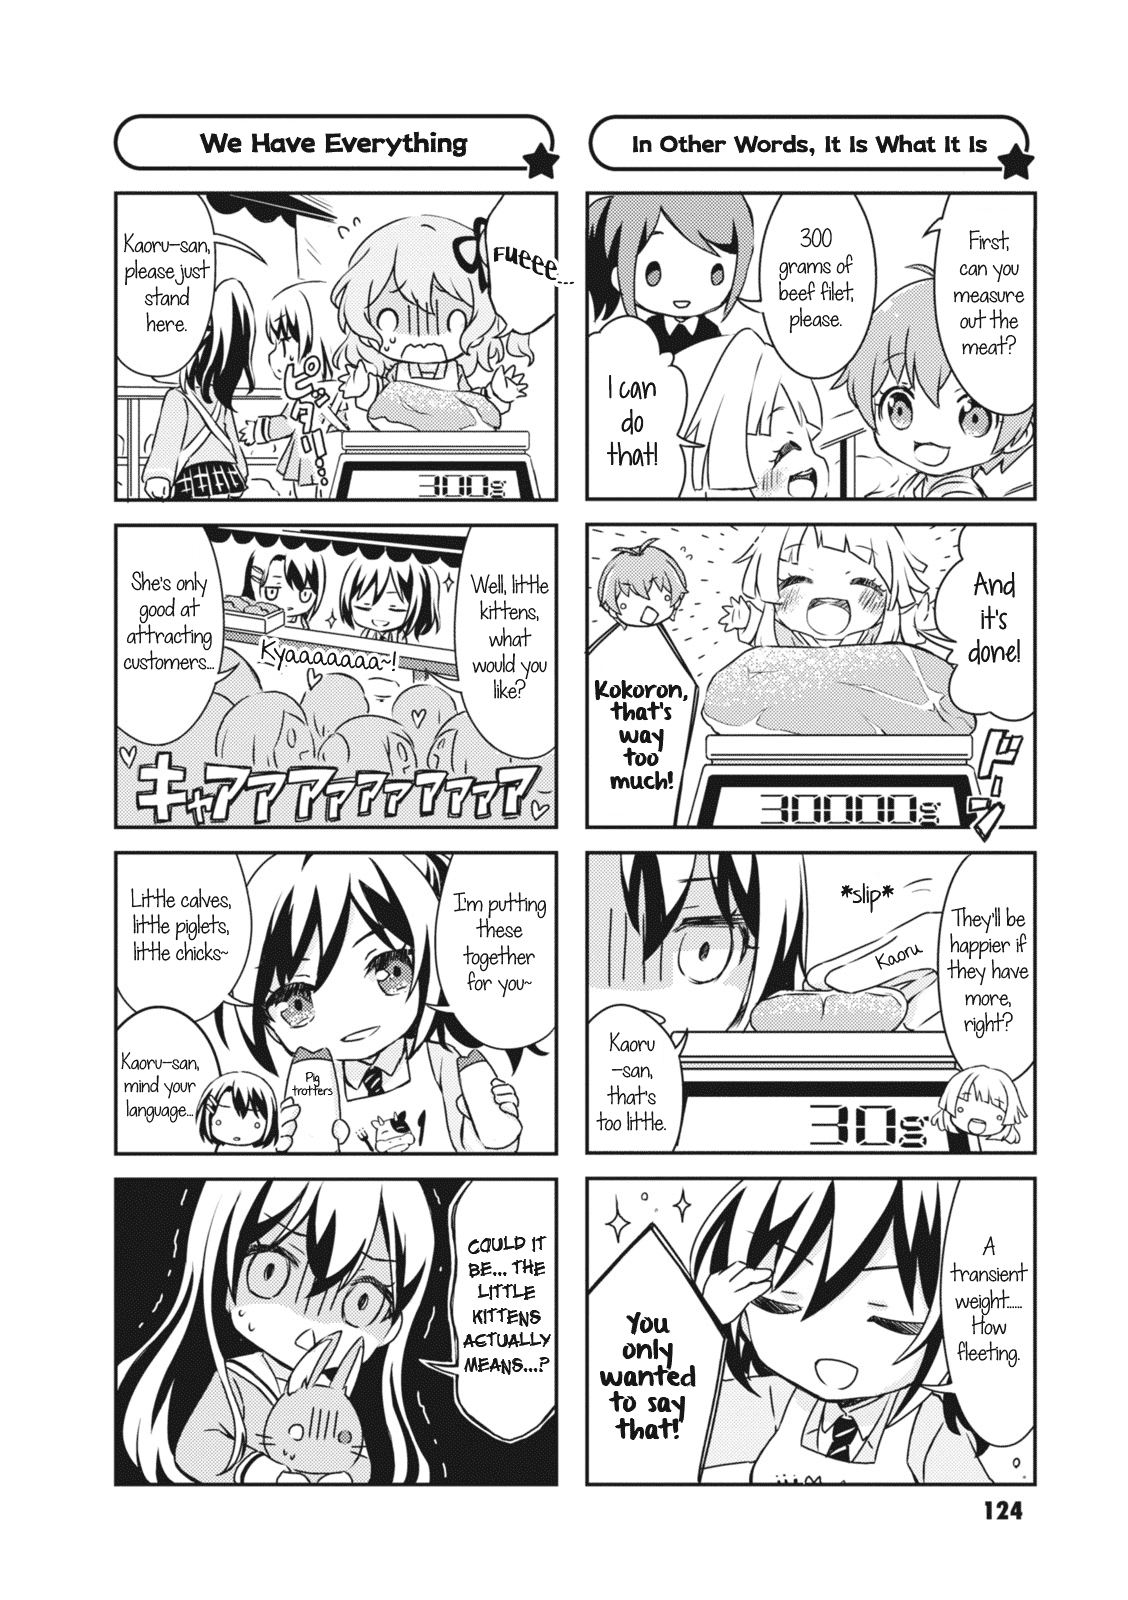 BanG Dream! Garupa☆PICO Comic Anthology Ch. 15 Kokoro's Community Field Trip